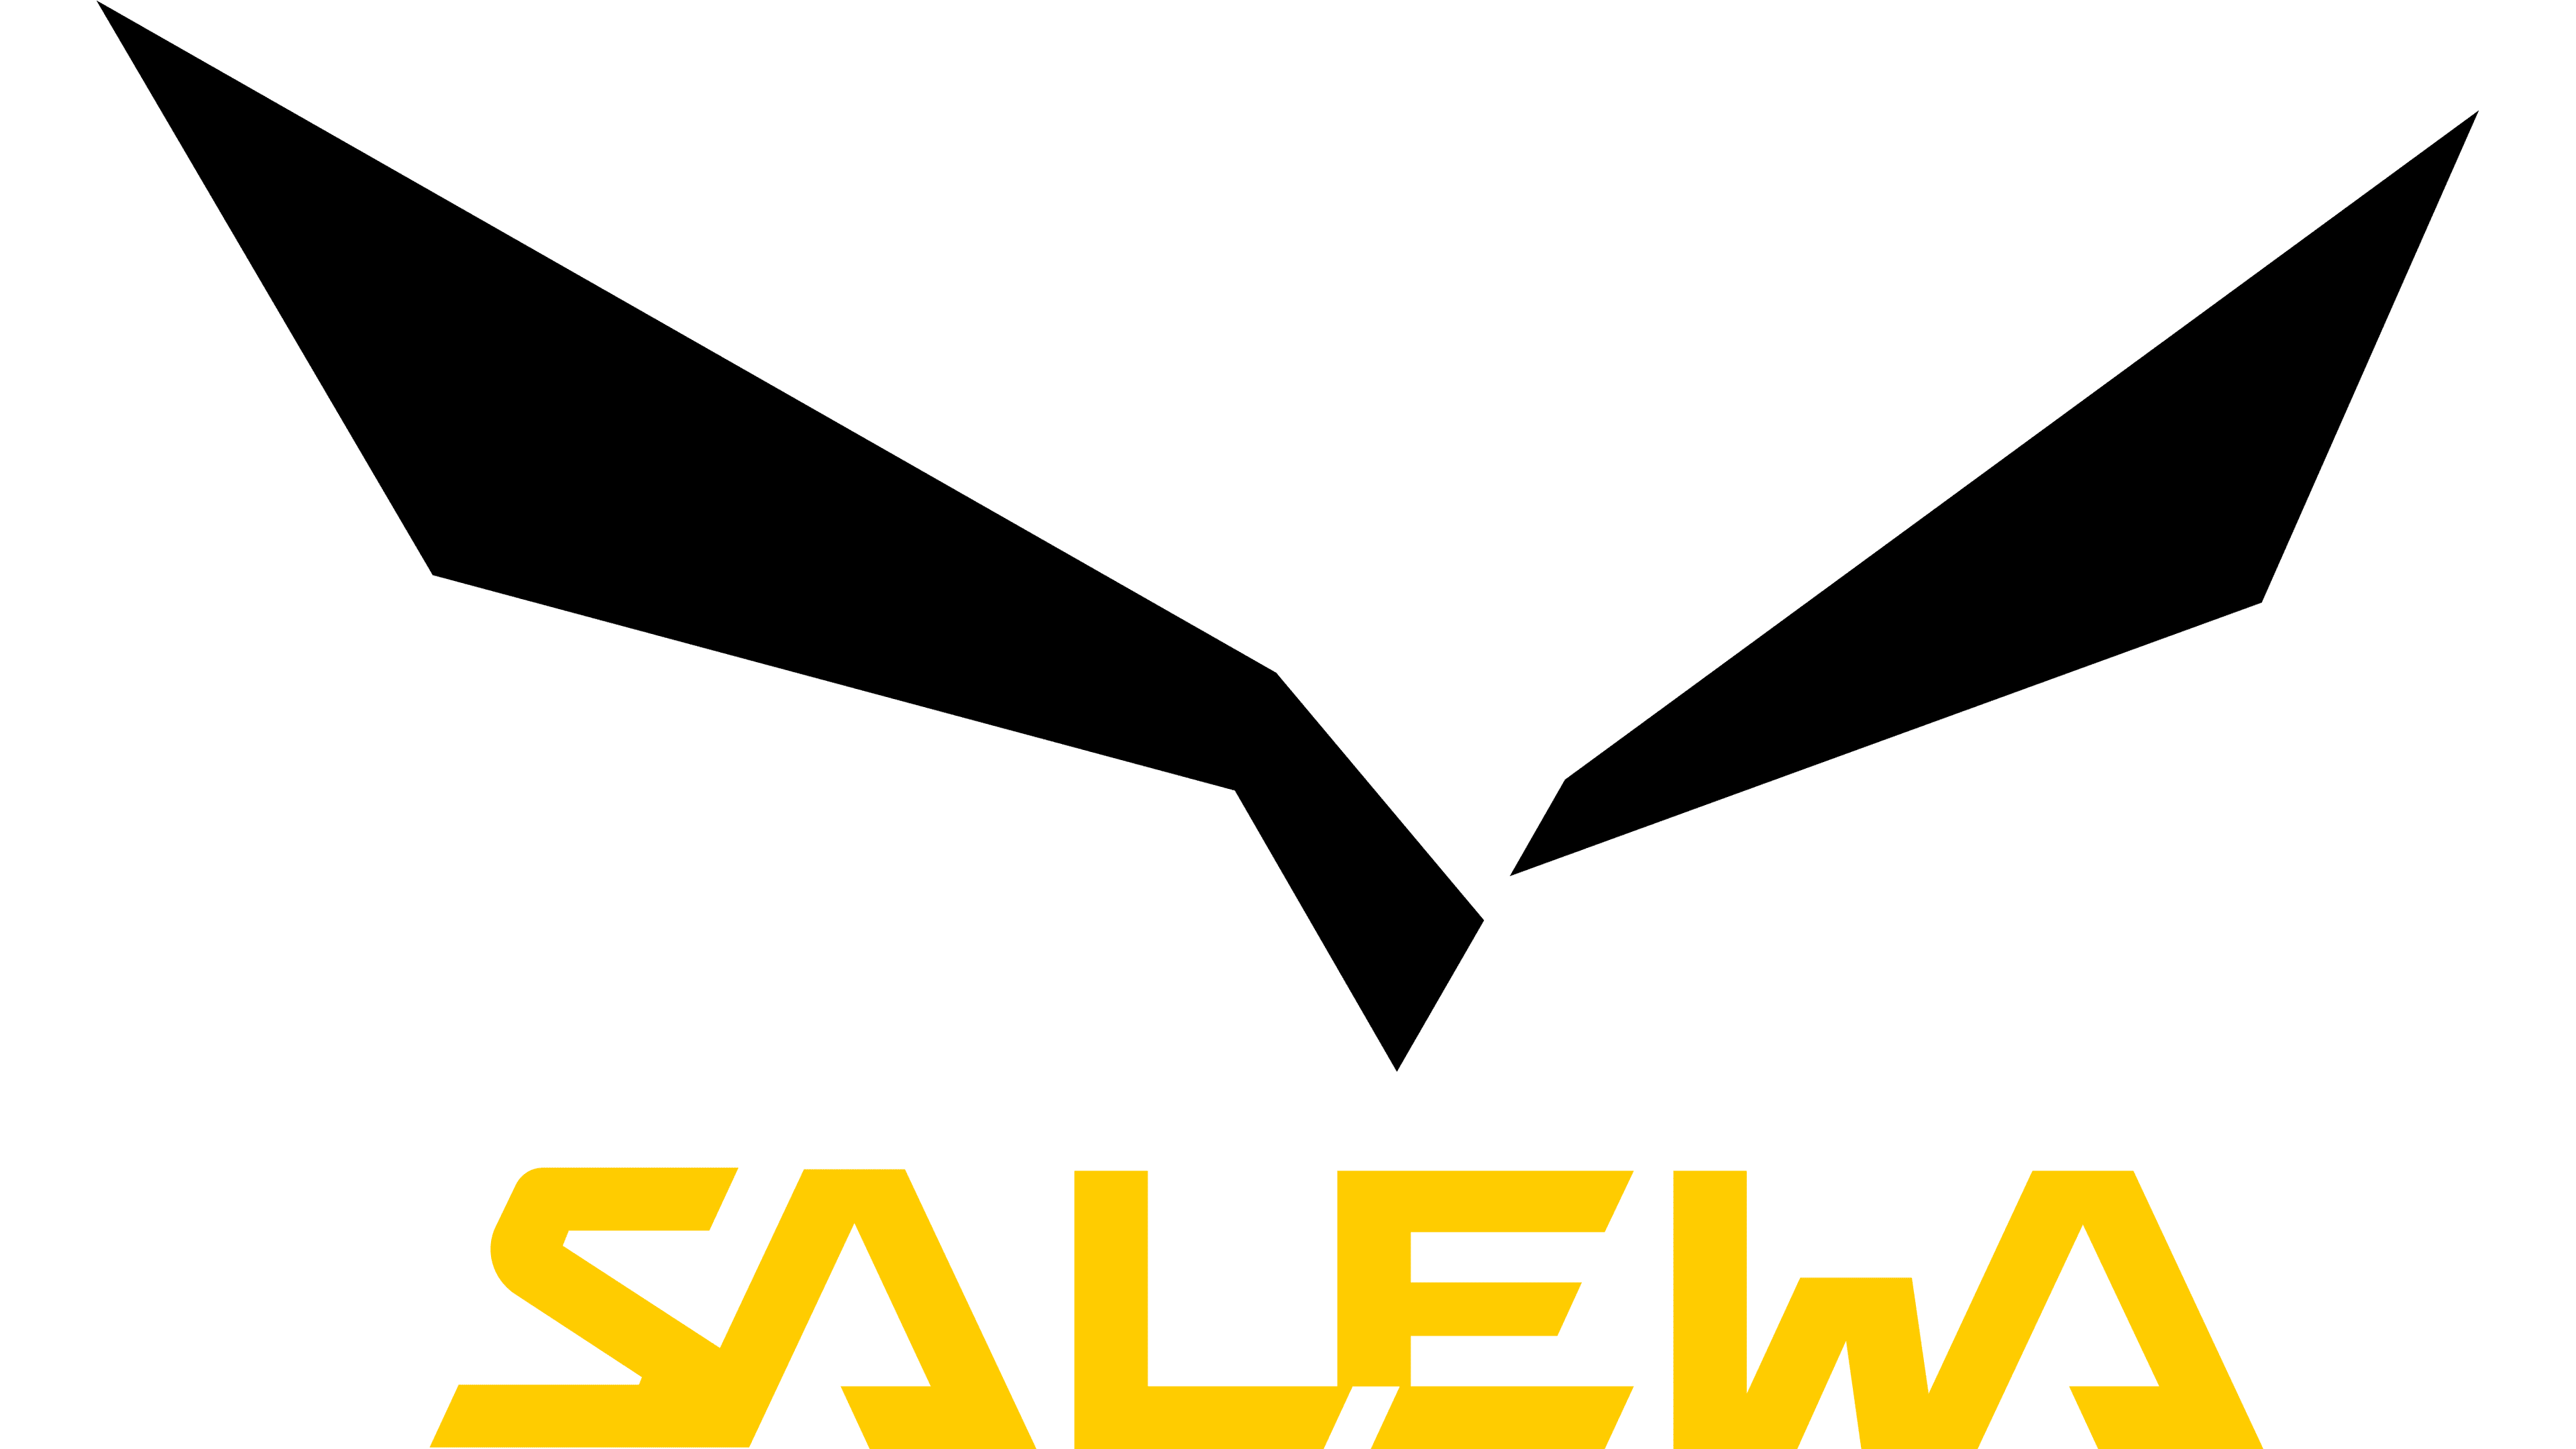 Salewa-logo - Outside Sports